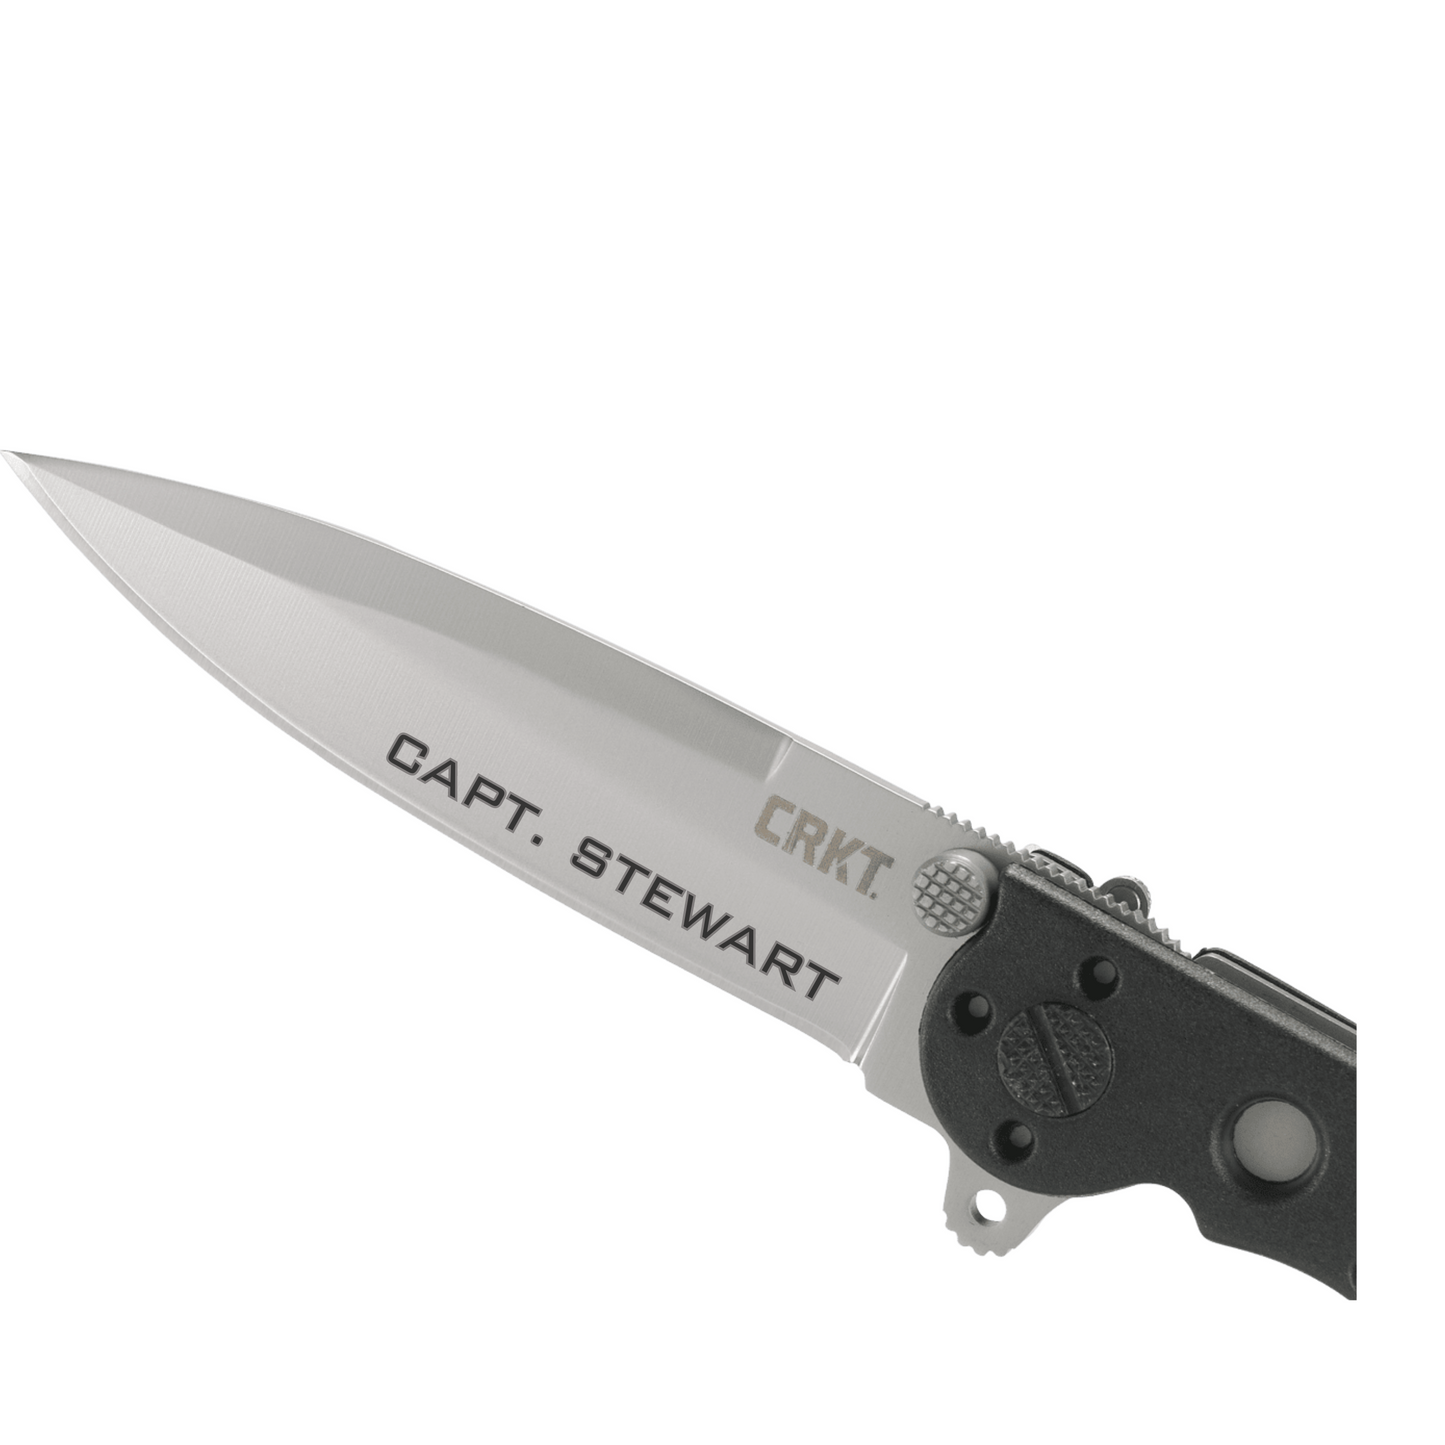 CRKT M-16 Knife Stainless Steel w/ bead blasted finish Optional Custom Laser Engraving